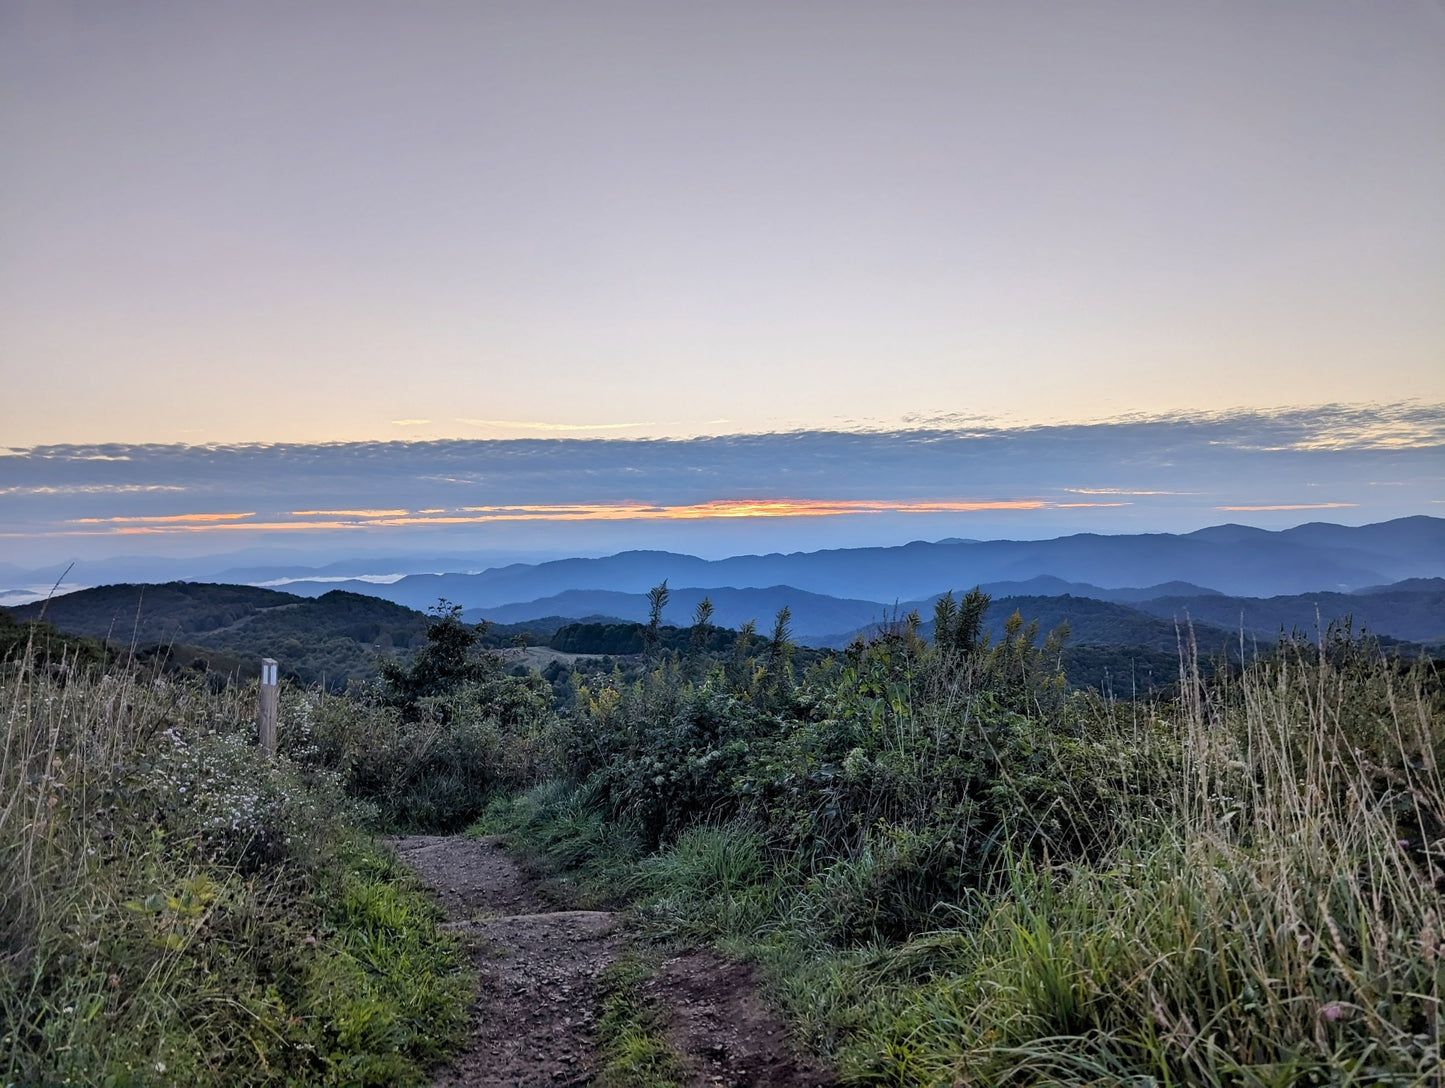 Appalachian Trail Beginner Backpacking Trip- Max Patch, NC: 3 days / 2 nights (2024)